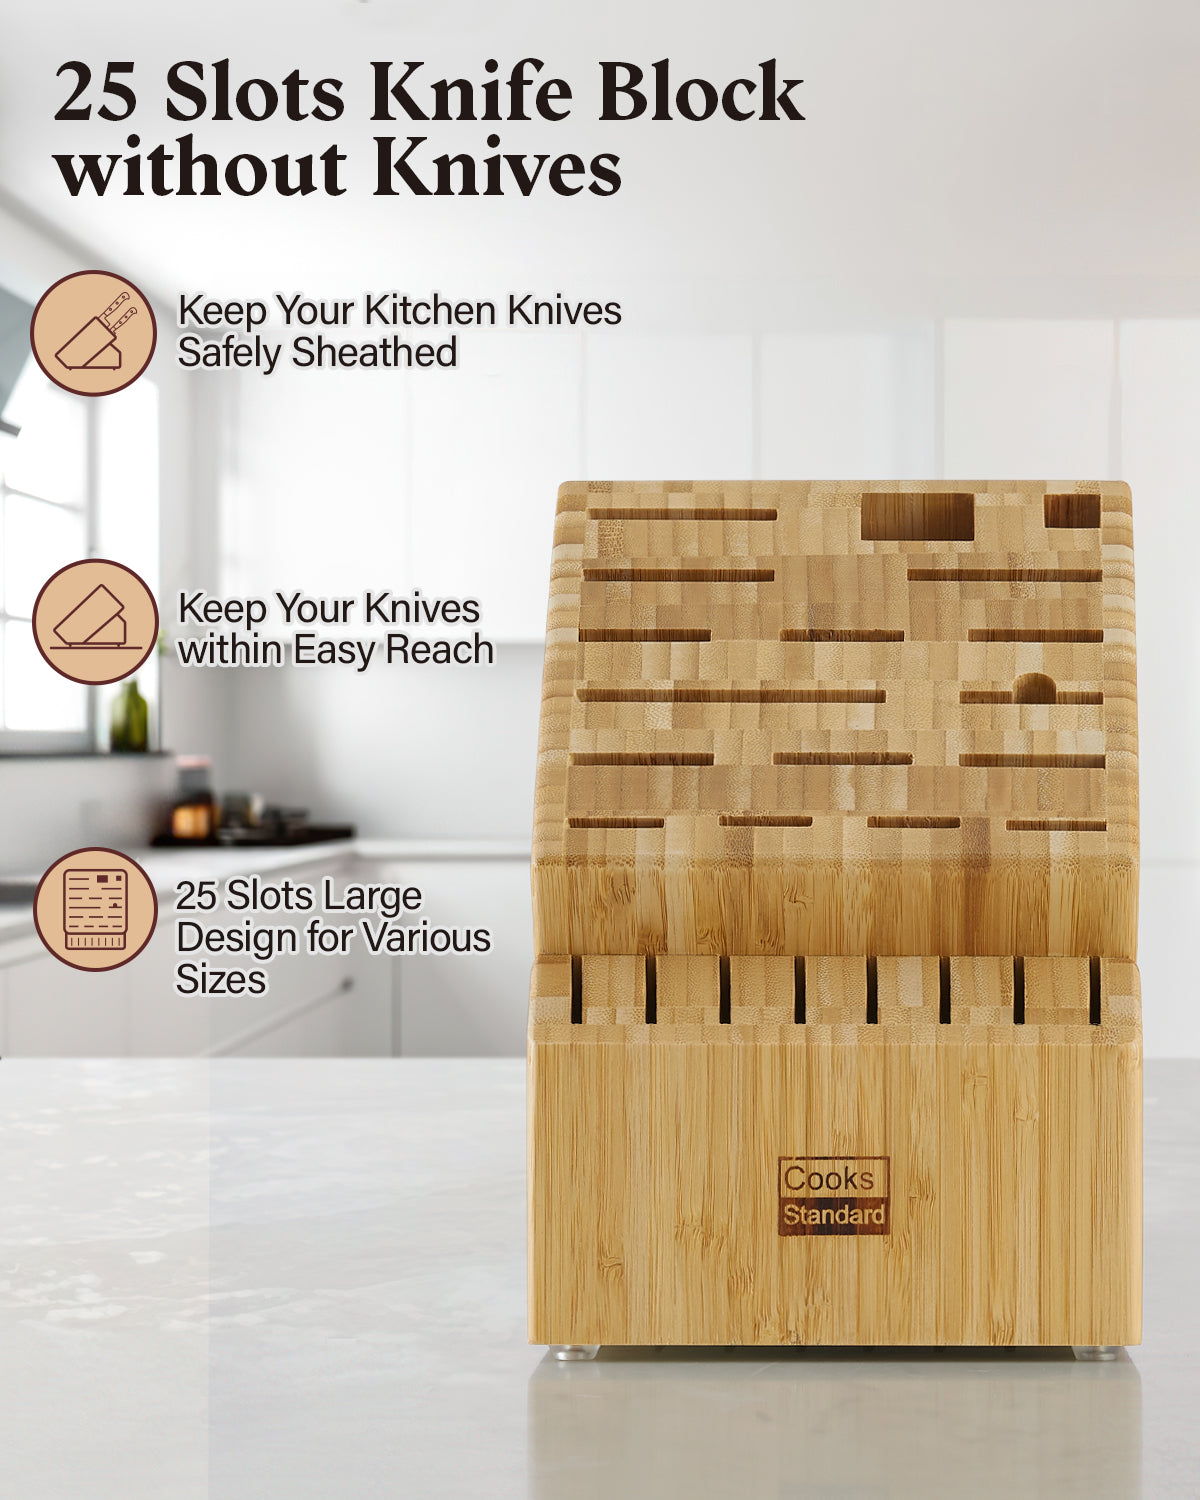 KITCHENDAO Deluxe 20 Slot Bamboo Knife Block Holder without Knives